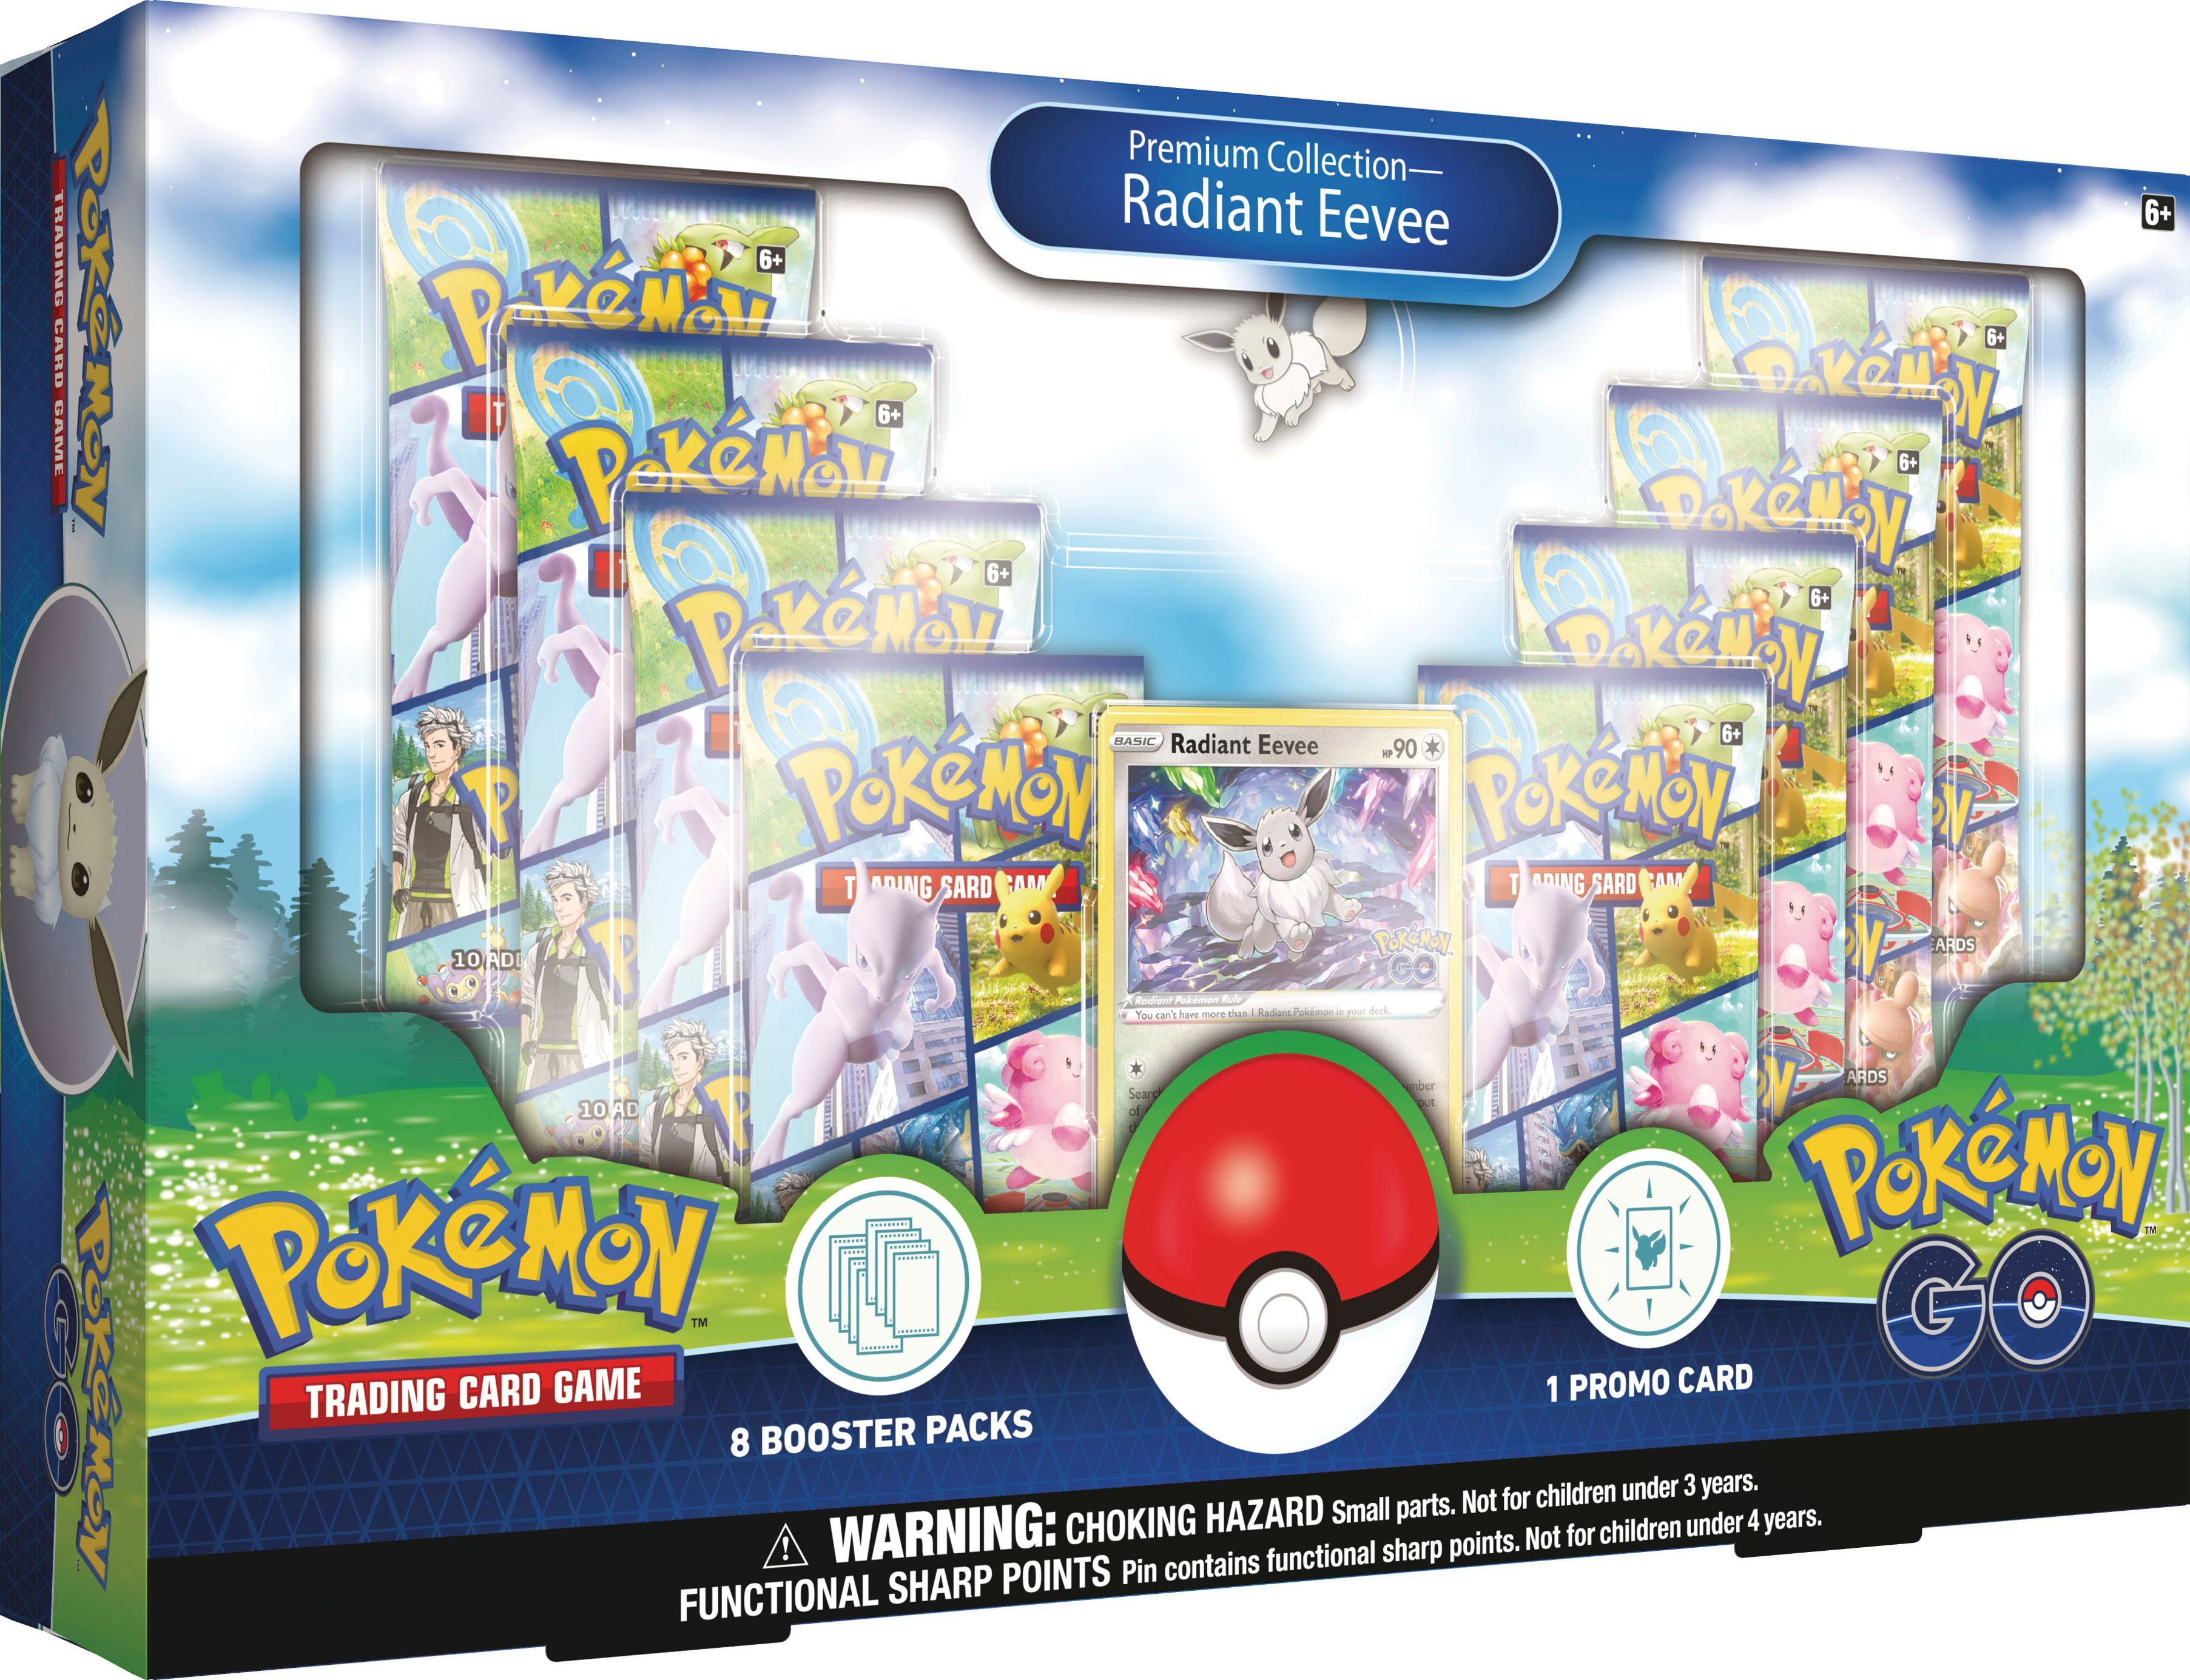 Pokémon Trading Card Game: Pokemon GO Premium Collection Radiant Eevee 87052 - Best Buy | Best Buy U.S.